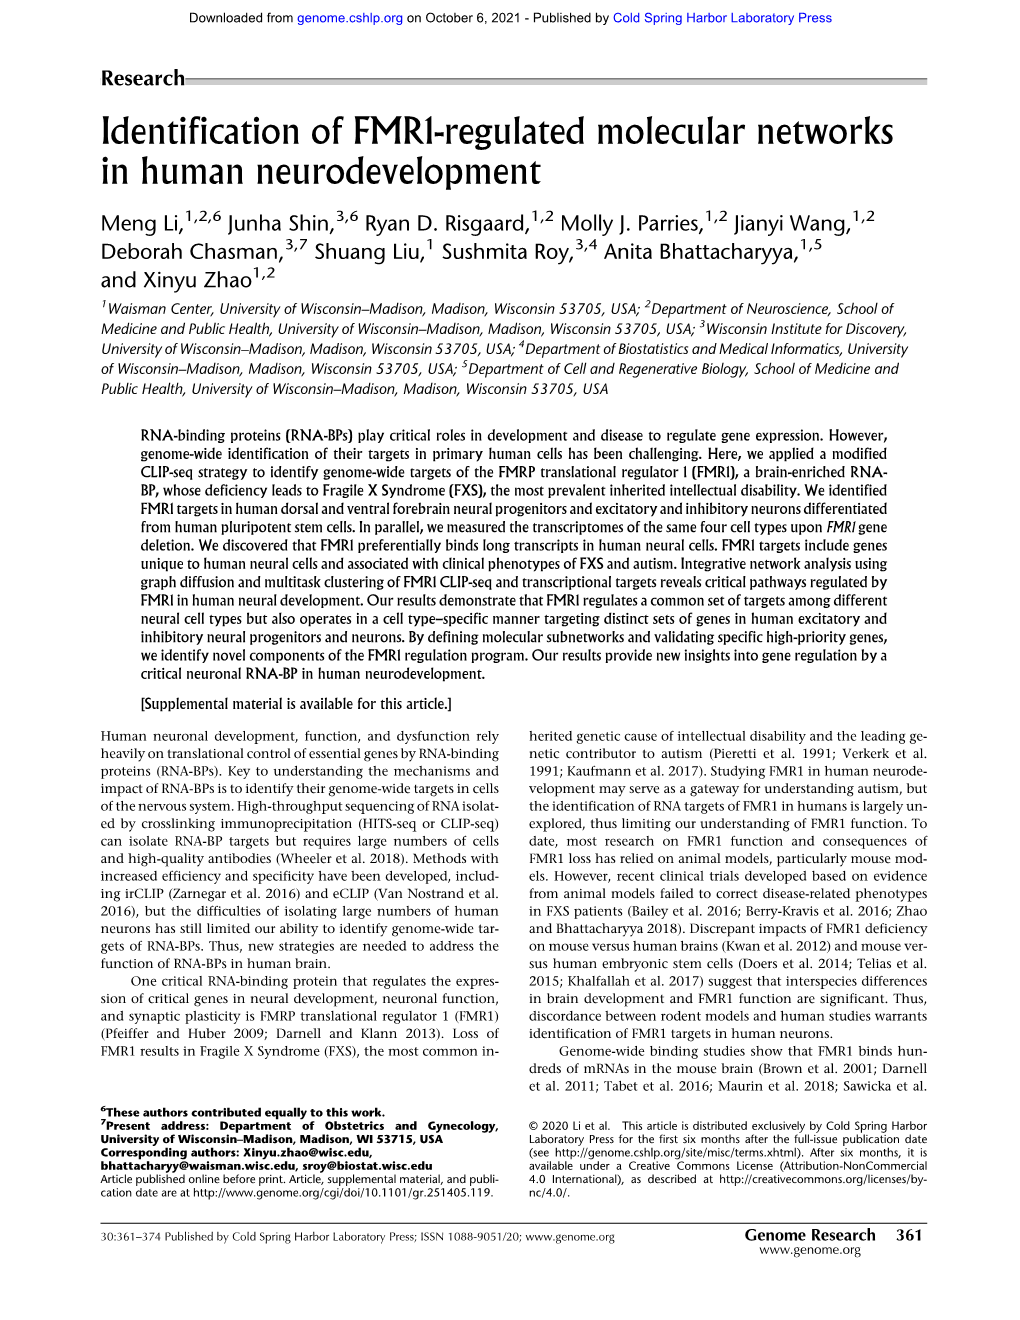 Identification of FMR1-Regulated Molecular Networks in Human Neurodevelopment